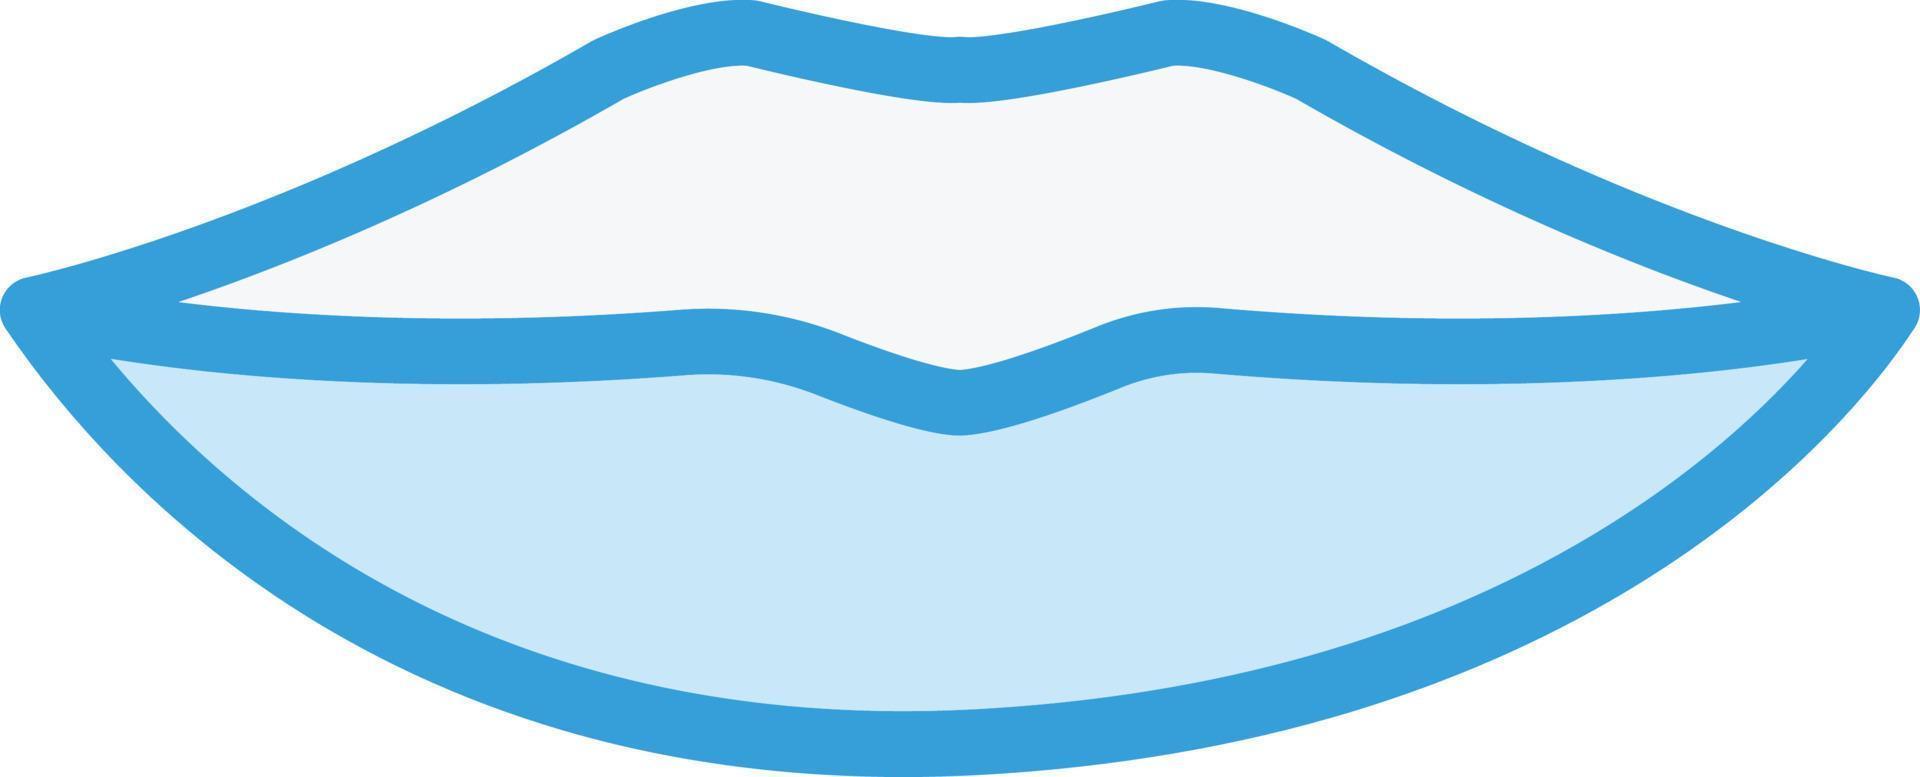 Lips Vector Icon Design Illustration